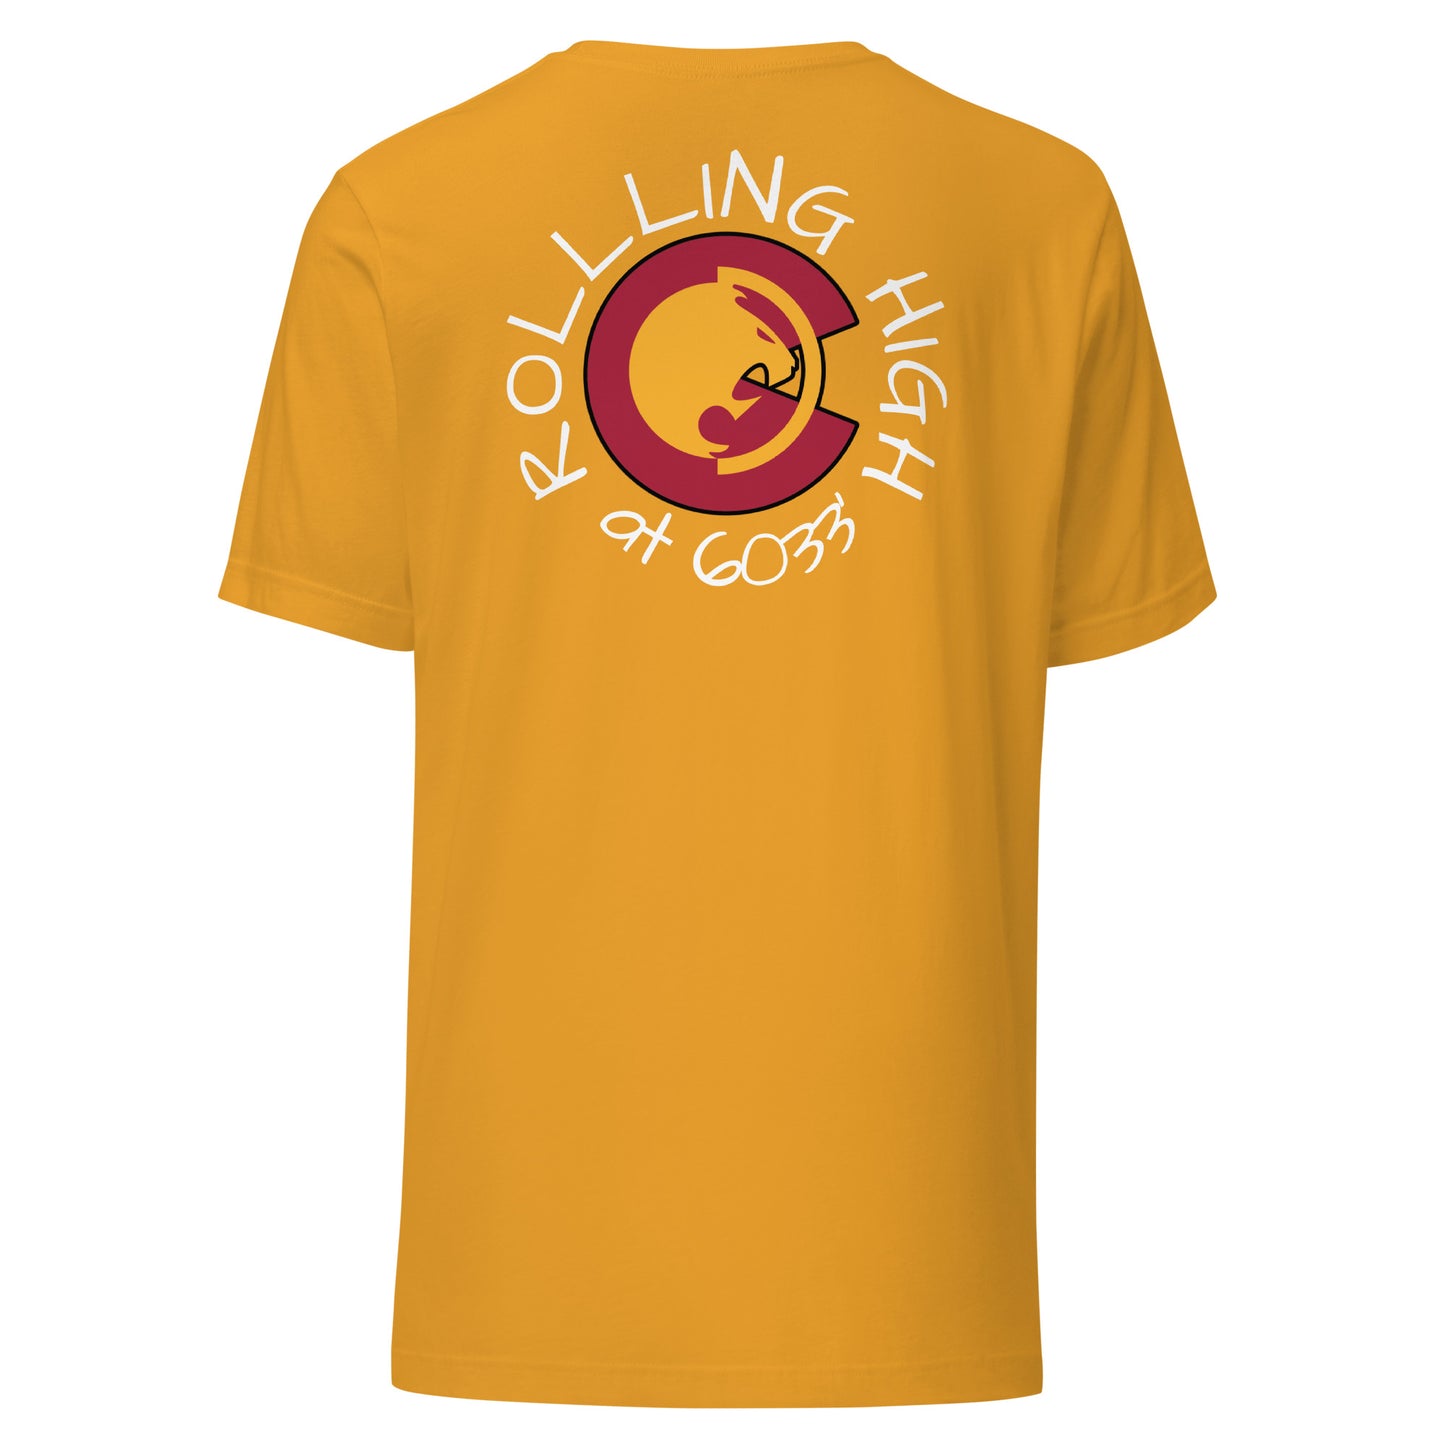 Rolling High Renzo Gracie Colorado t-shirt